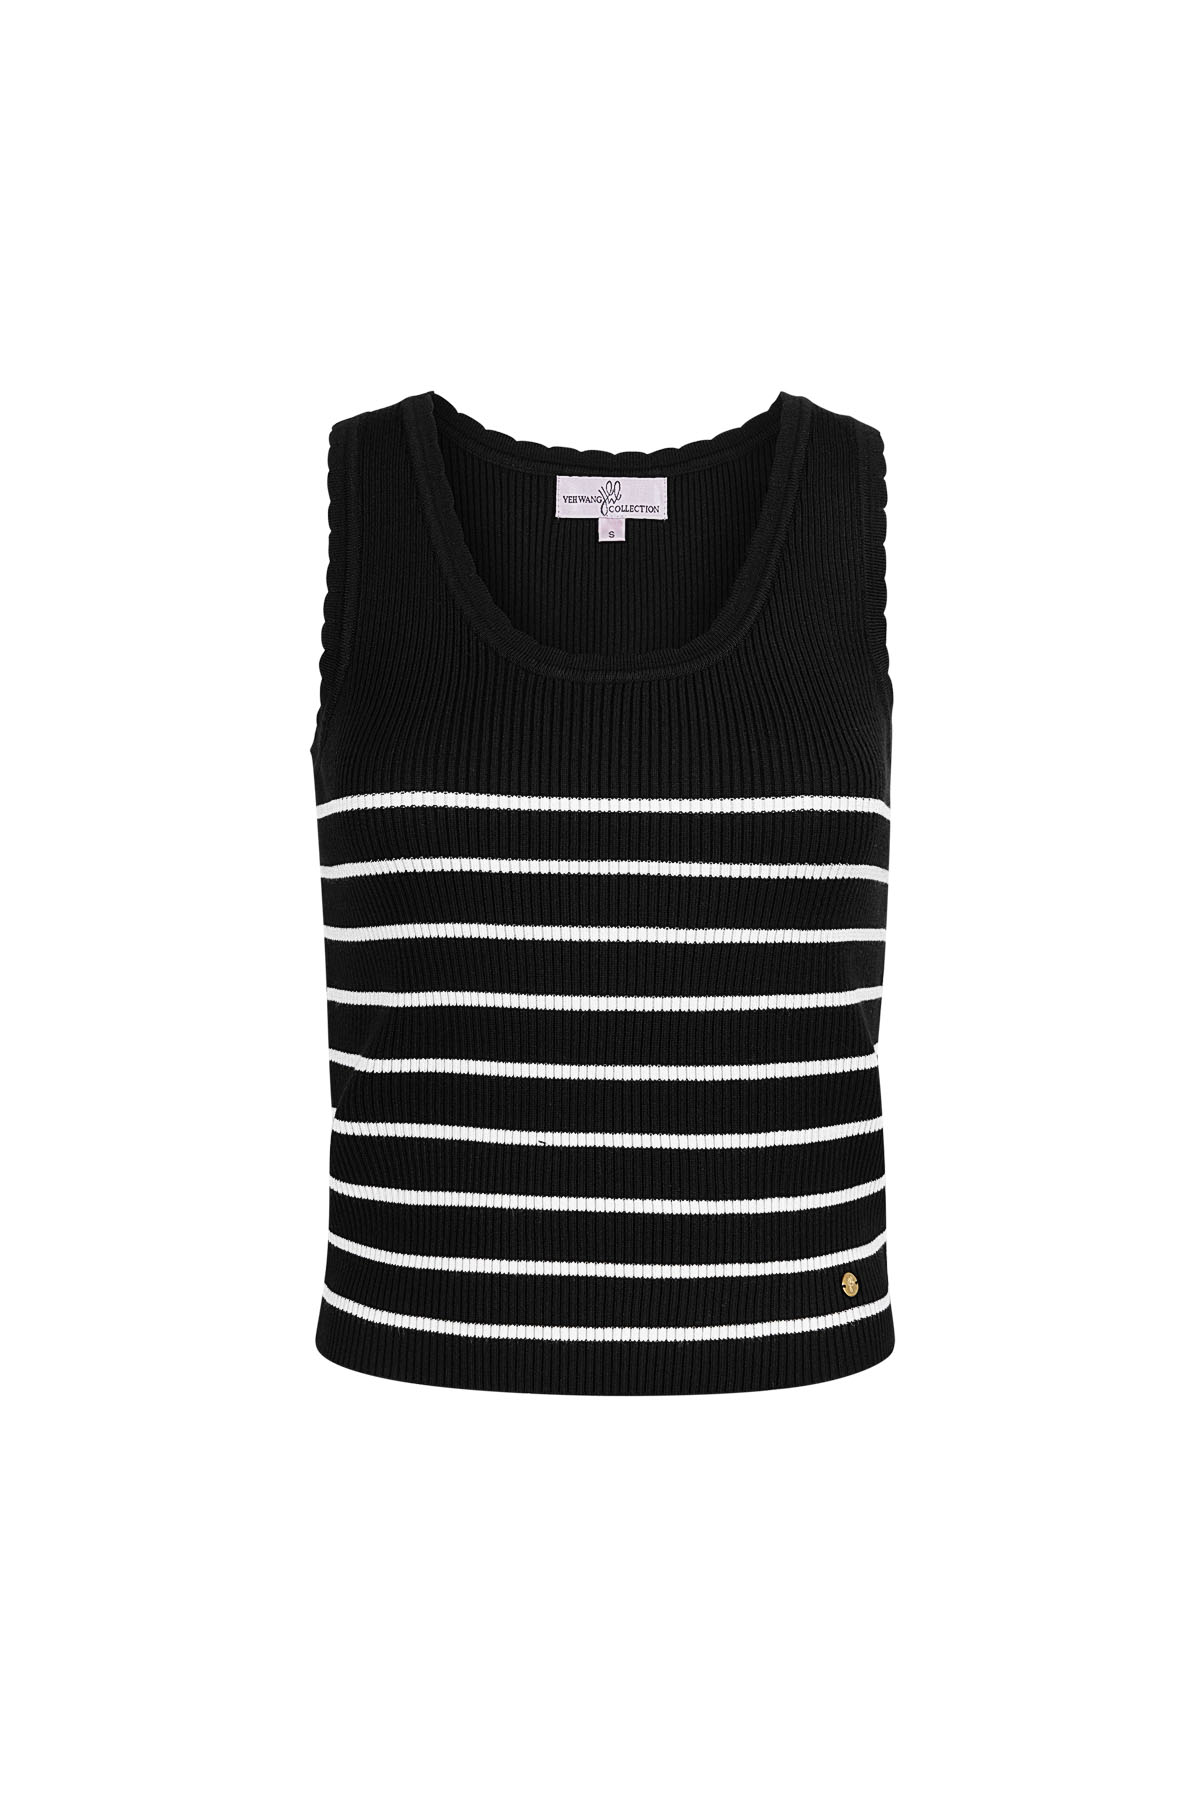 Striped, sleeveless top with classic edge medium – black h5 